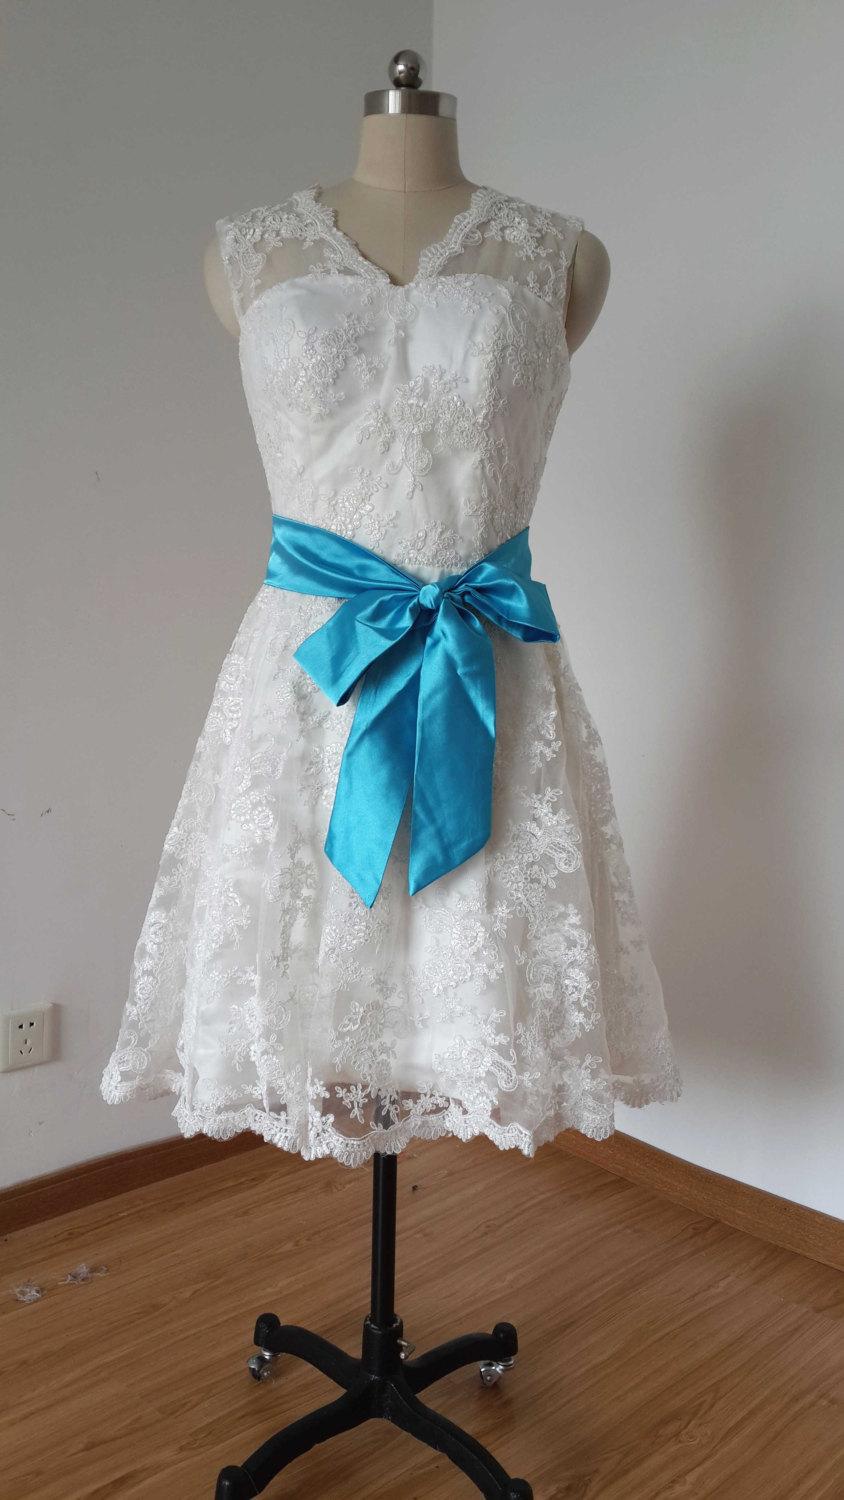 Mariage - V-Neck Backless Short Ivory Lace Wedding Dress with Teal Blue Sash